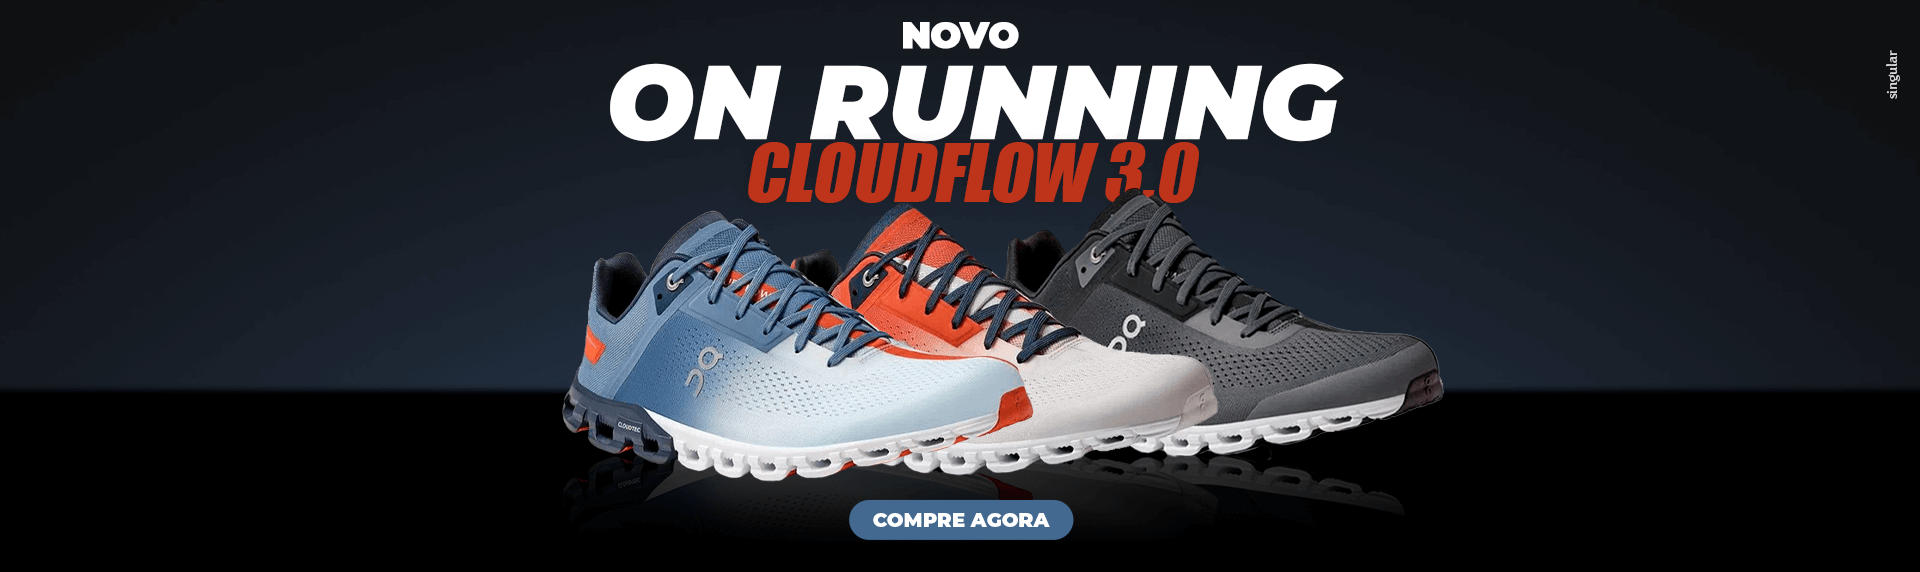 Cloudflow 3.0